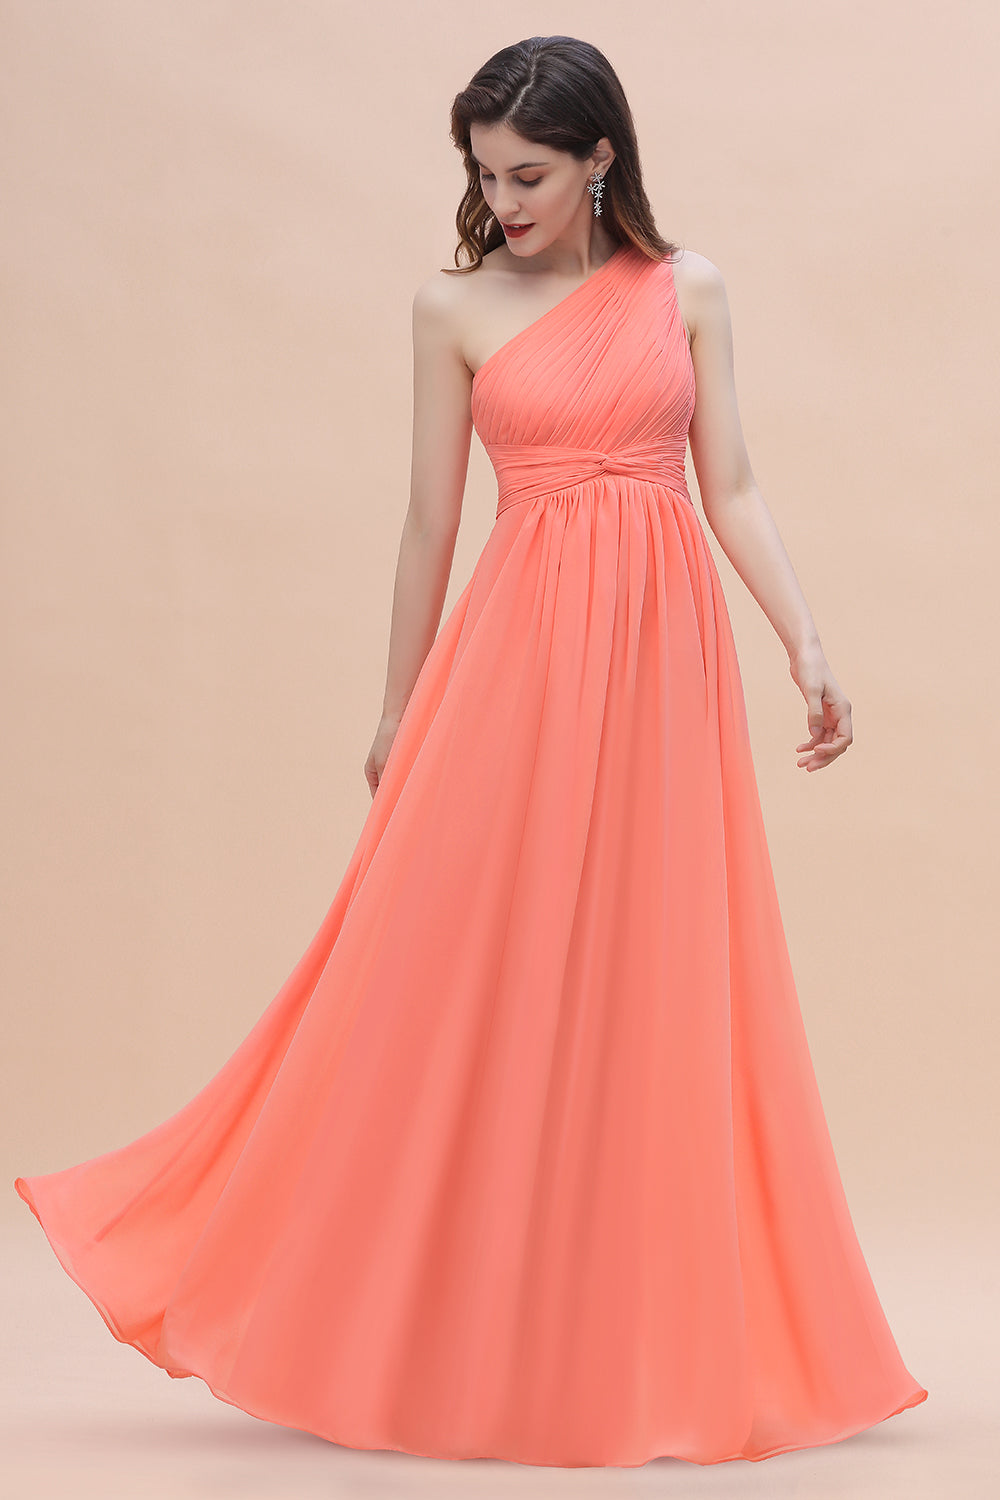 Chic One-Shoulder Ruffles Chiffon Coral Bridesmaid Dresses On Sale-27dress